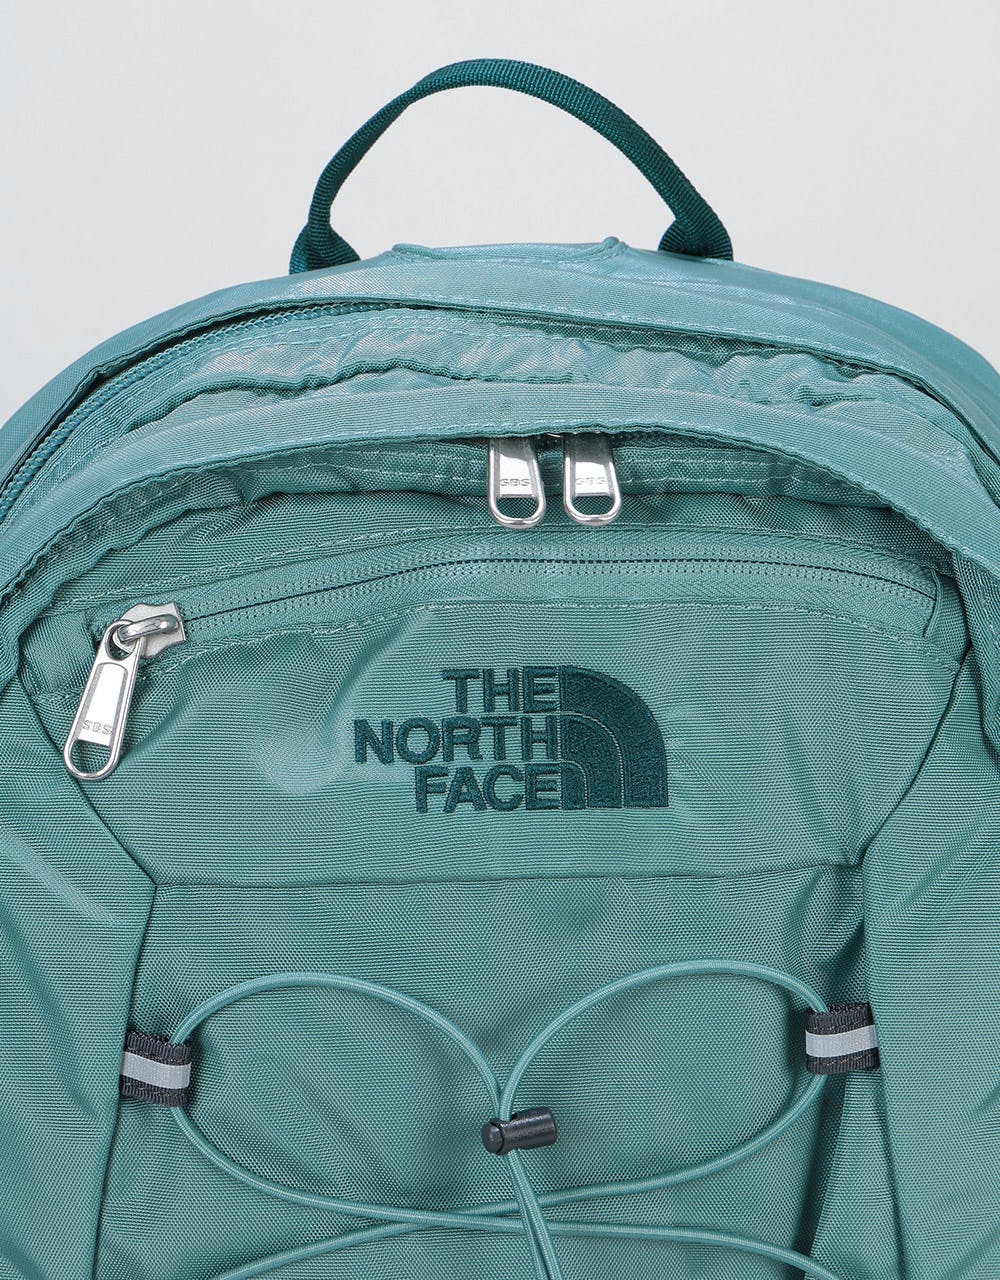 The North Face Borealis Classic Backpack - Trellis Green/Ponderosa Gre